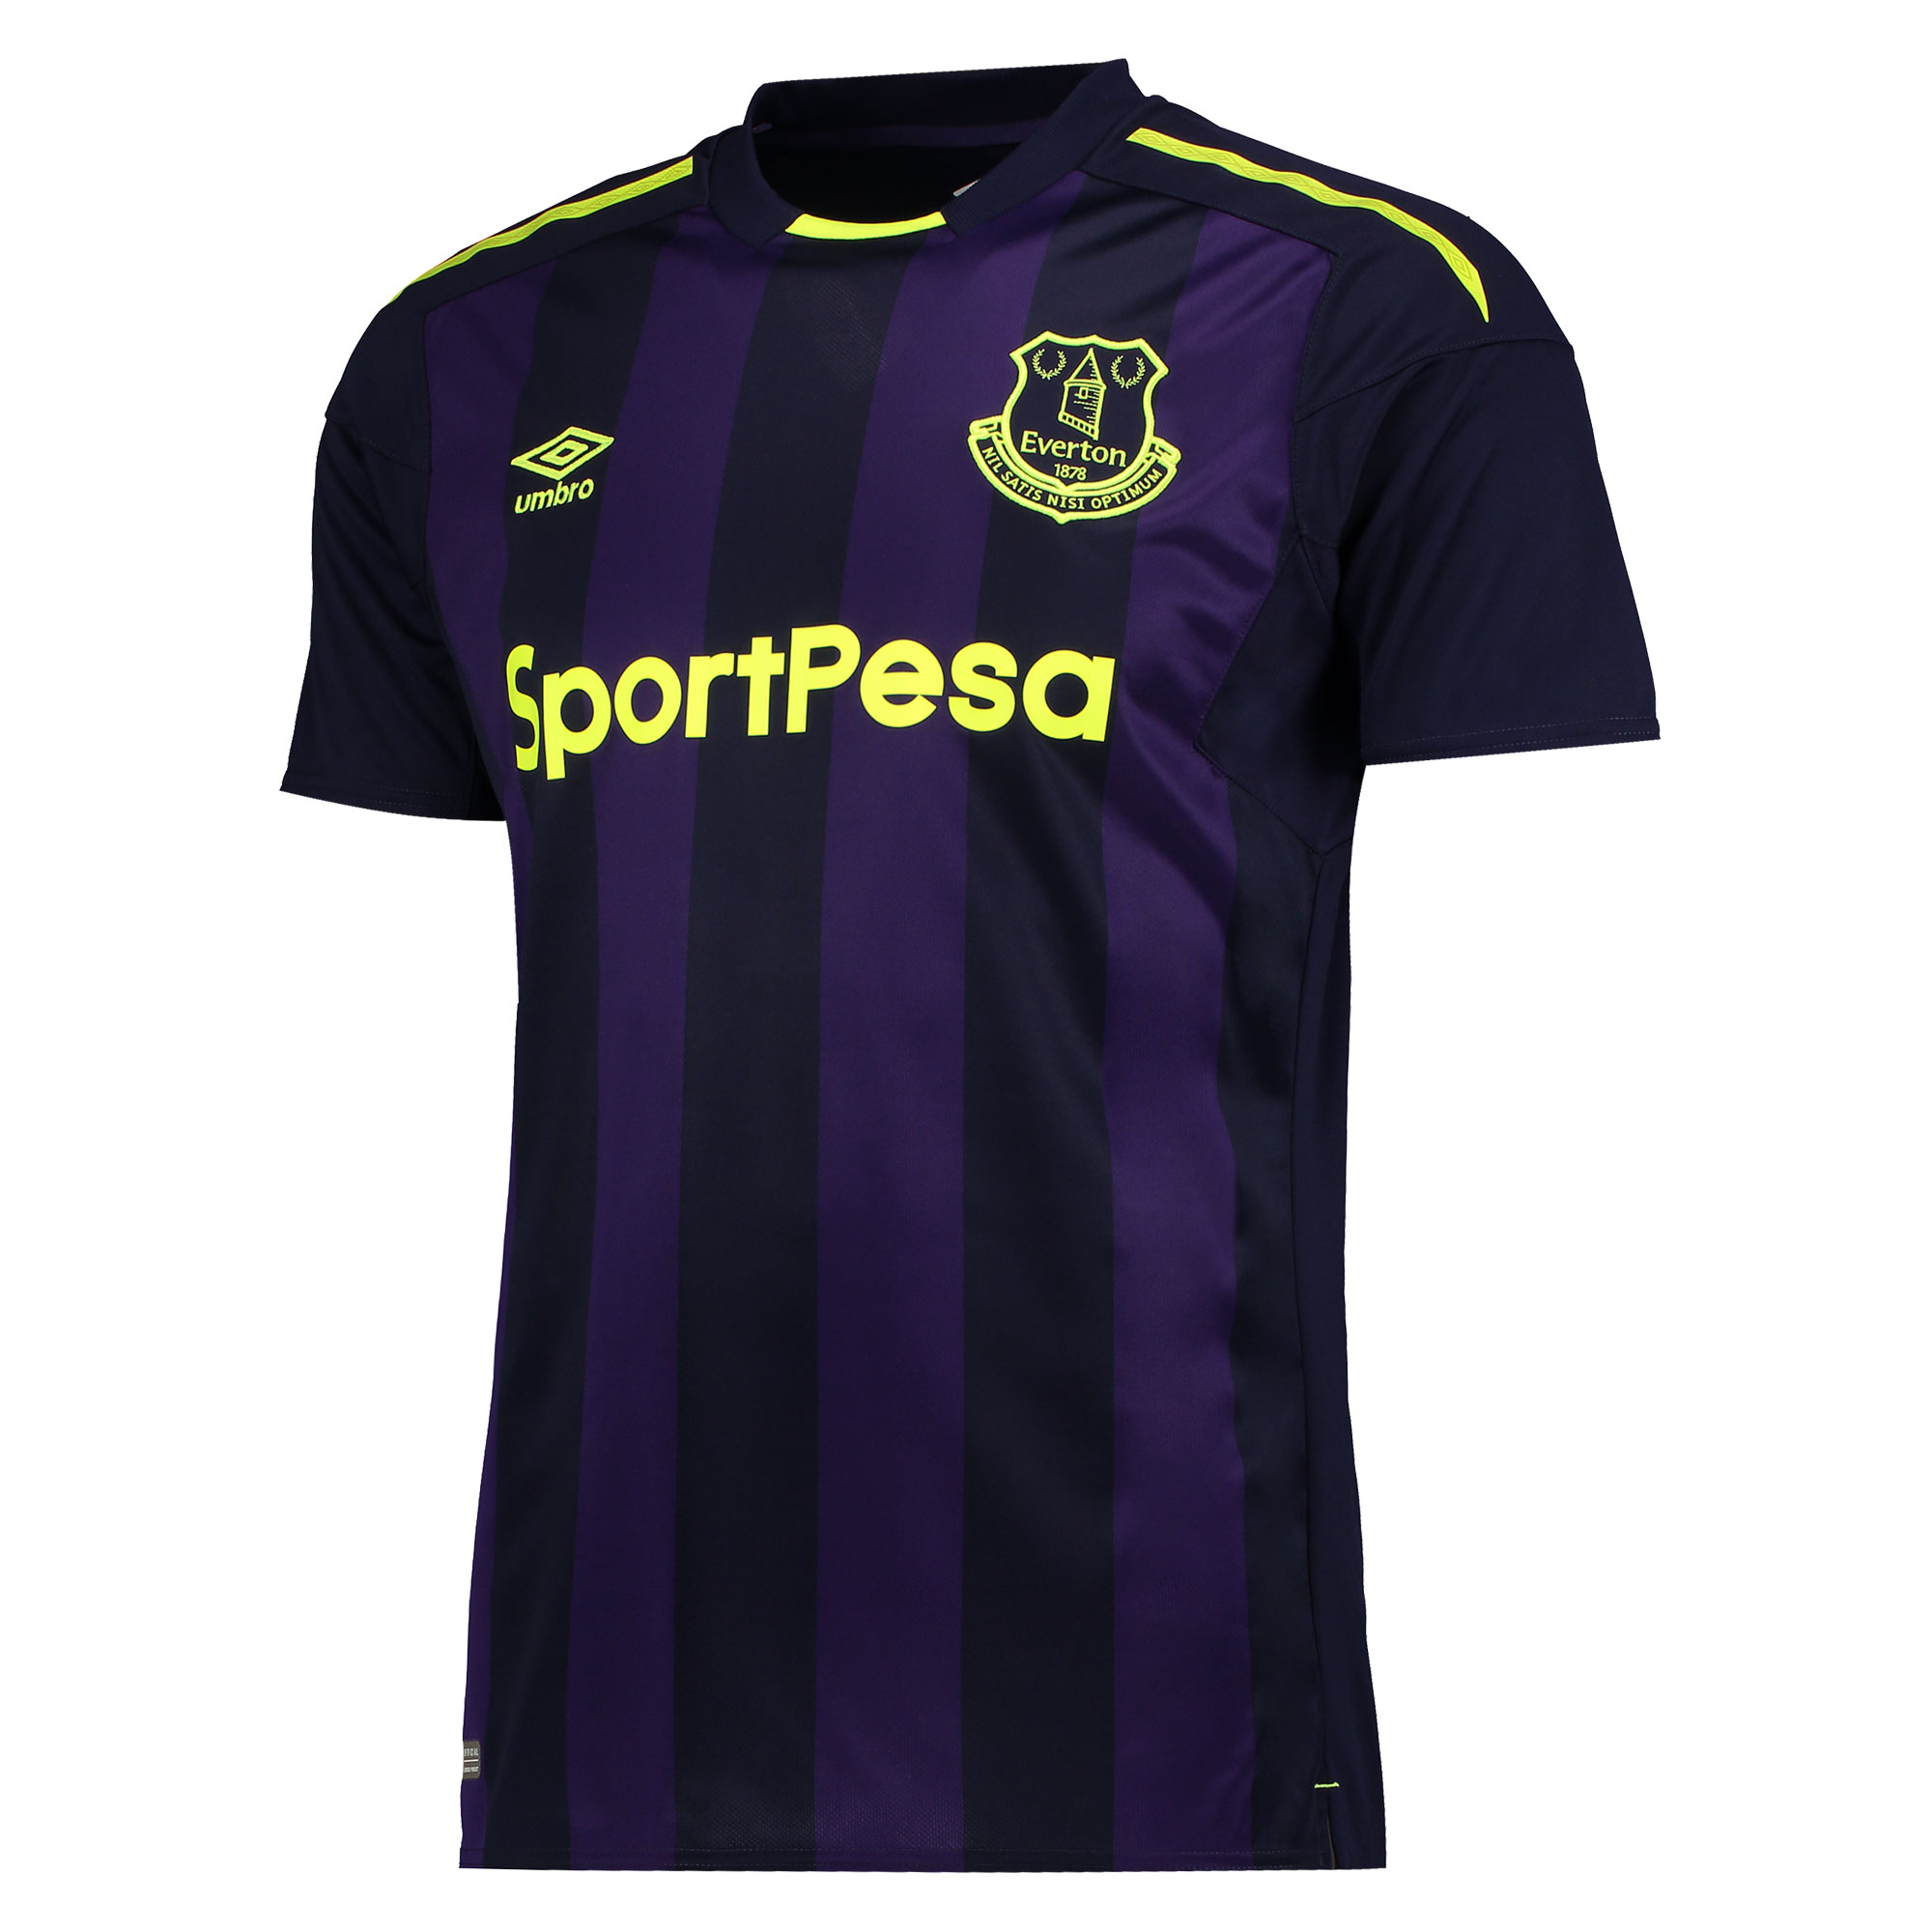 New Umbro 2017/18 Adult Everton FC Away Shirt Top Jersey 2 for £12.99 2XL XXL 